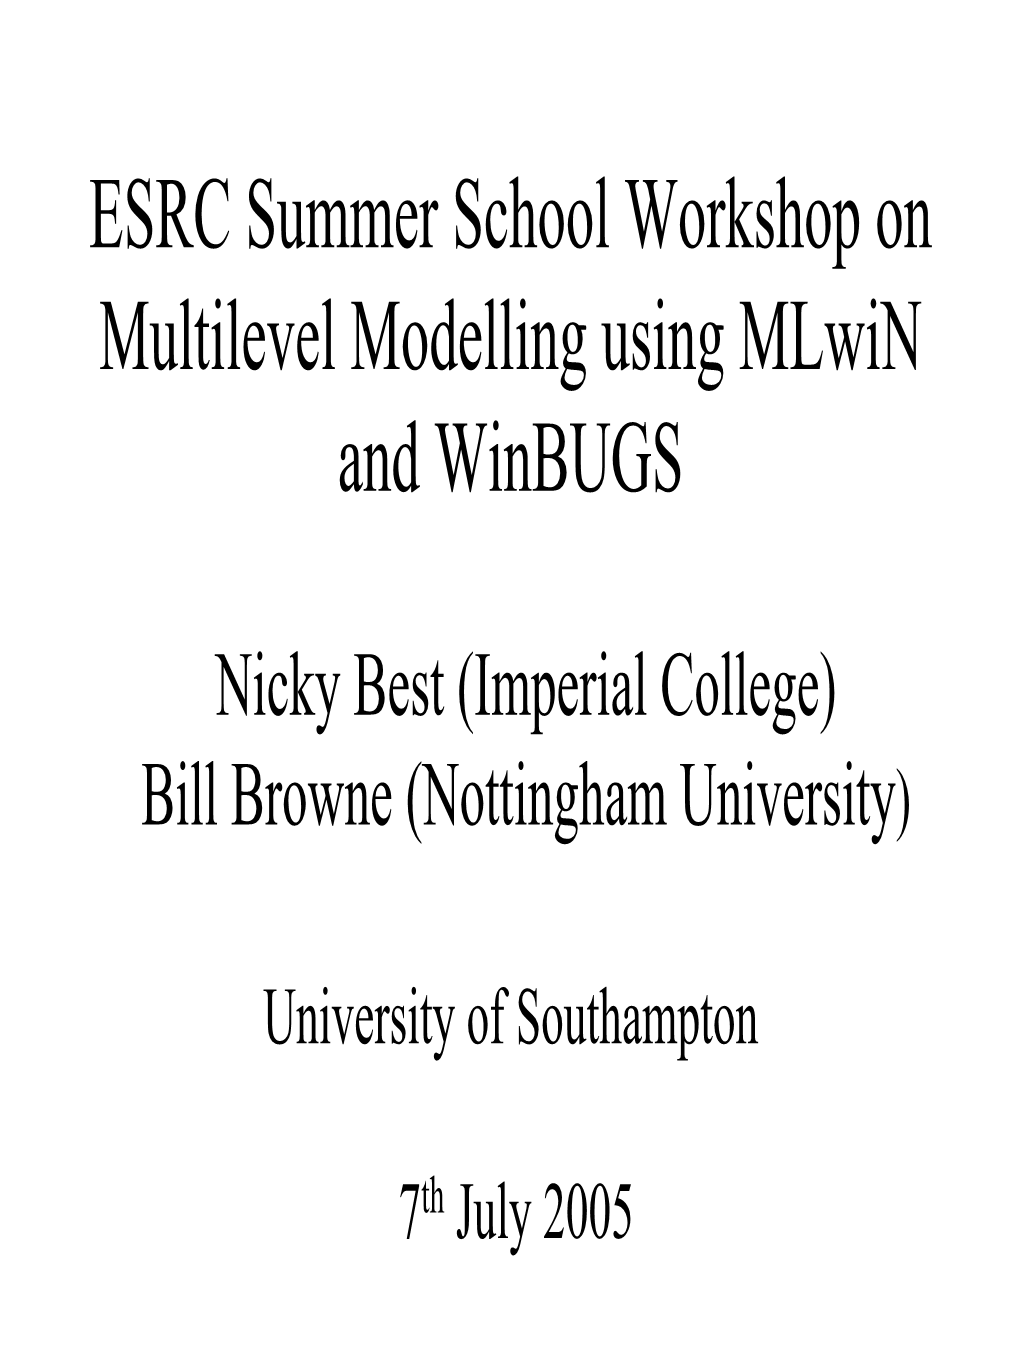 ESRC Summer School Workshop on Multilevel Modelling Using Mlwin and Winbugs